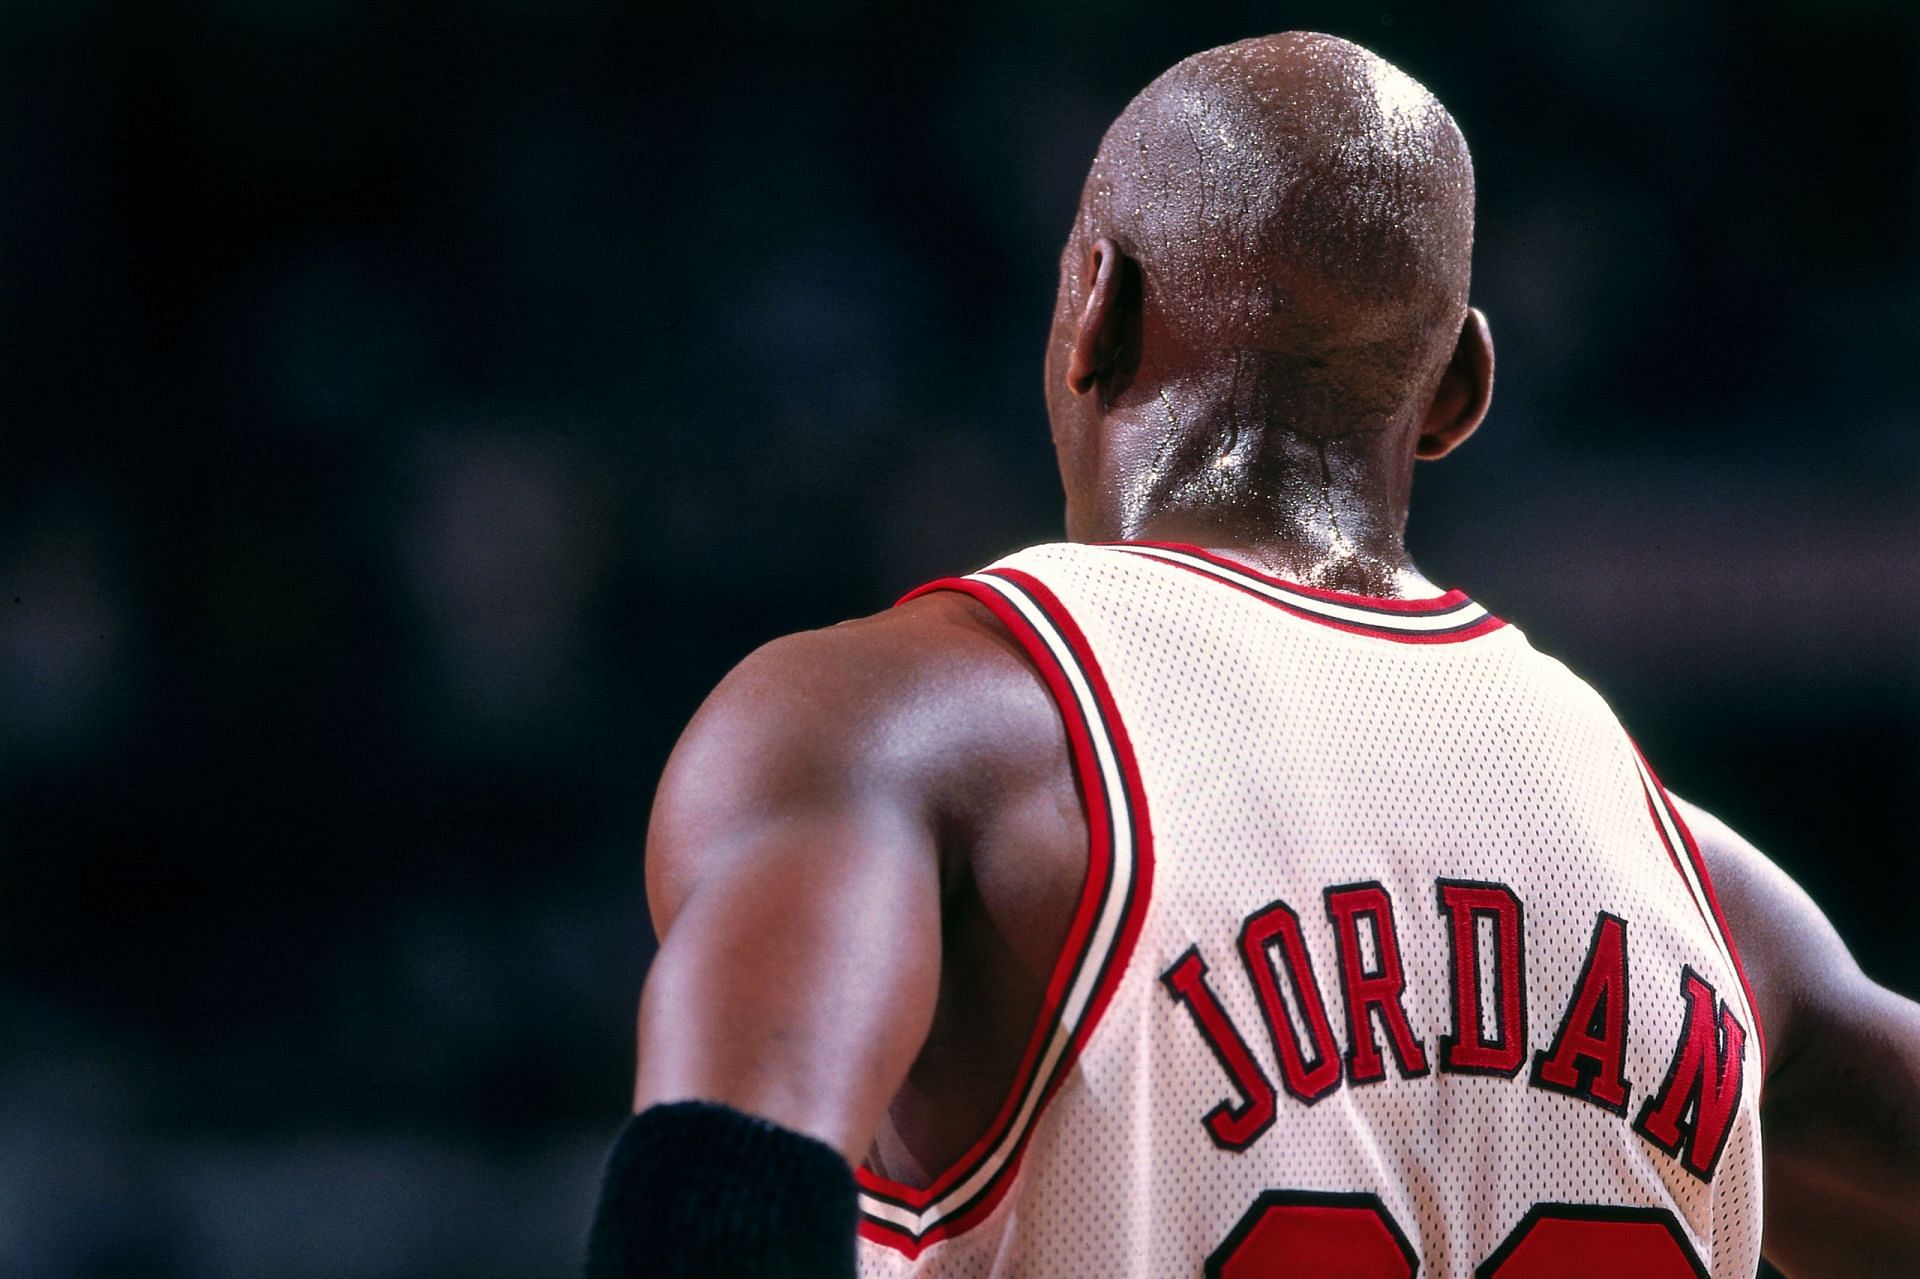 Chicago Bulls NBA legend Michael Jordan